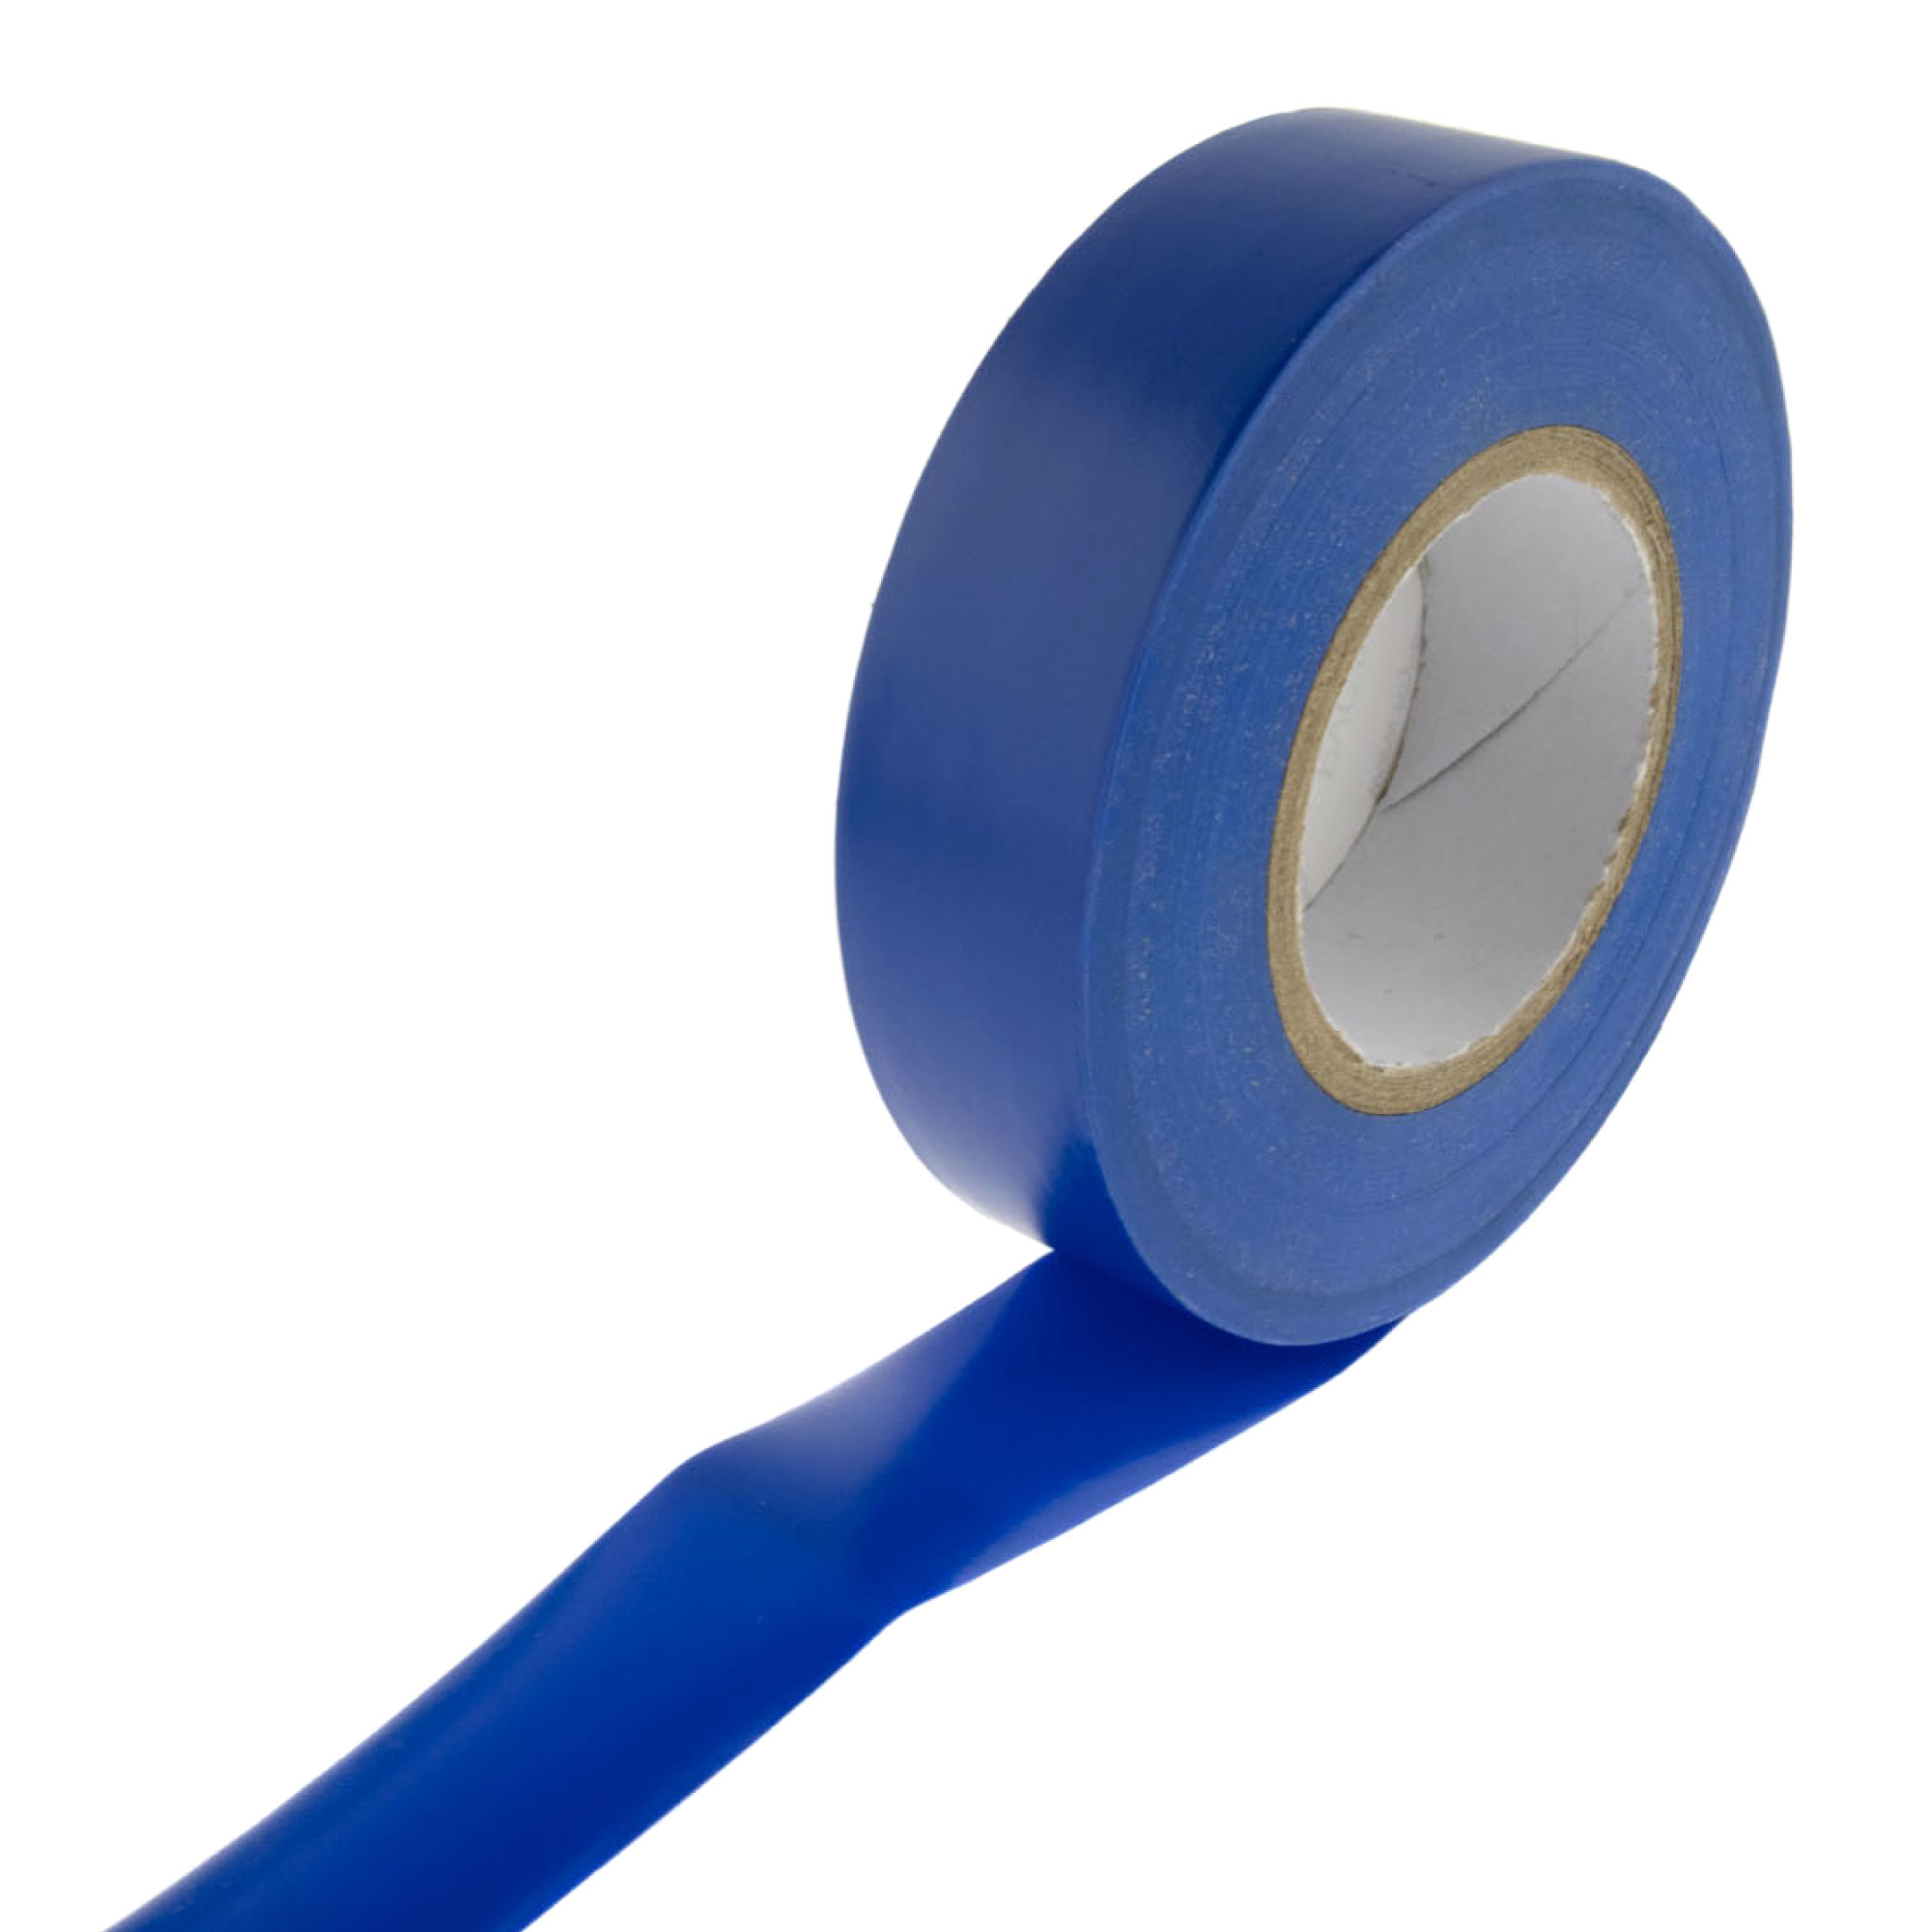 PVC insulating tape 19mm x 33m, blue